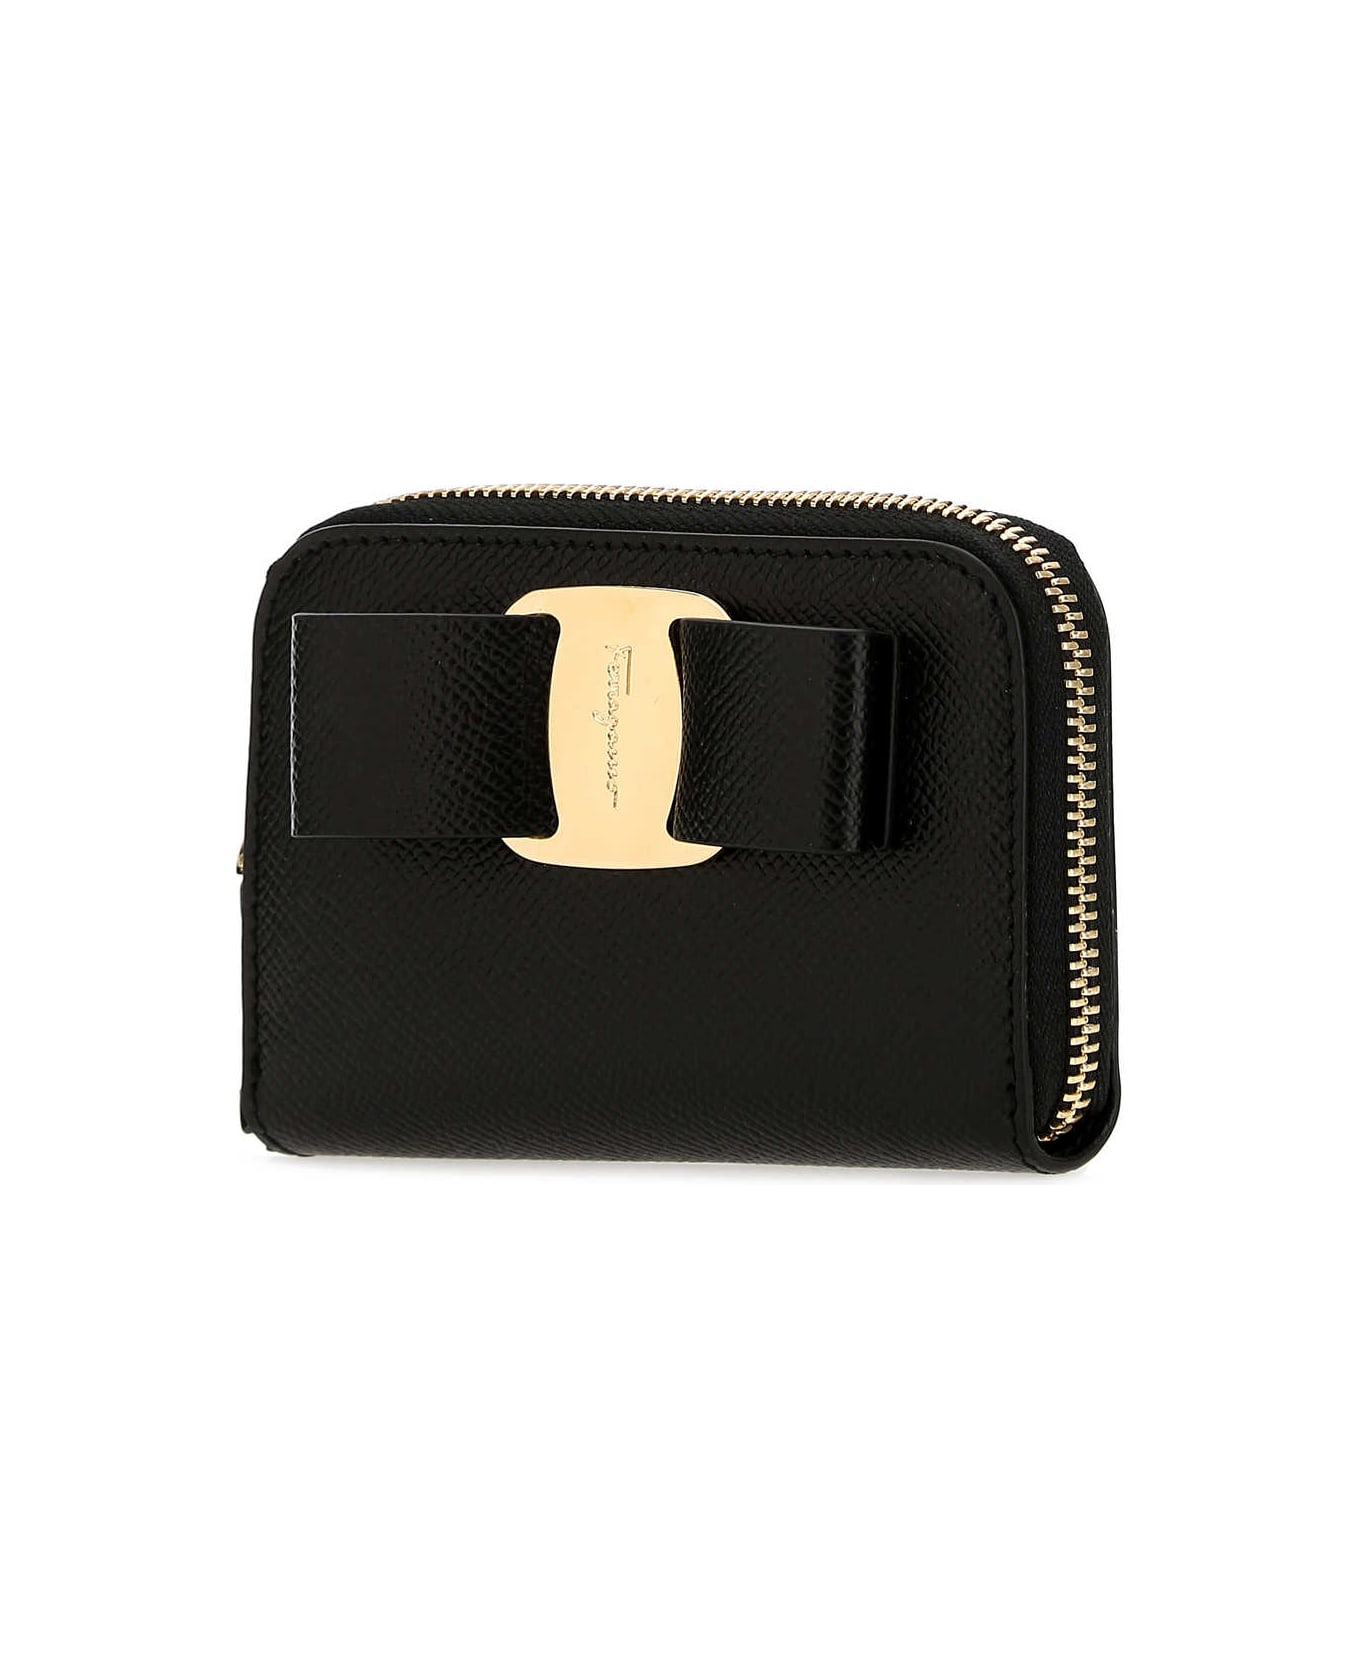 Ferragamo Black Leather Wallet - NERO